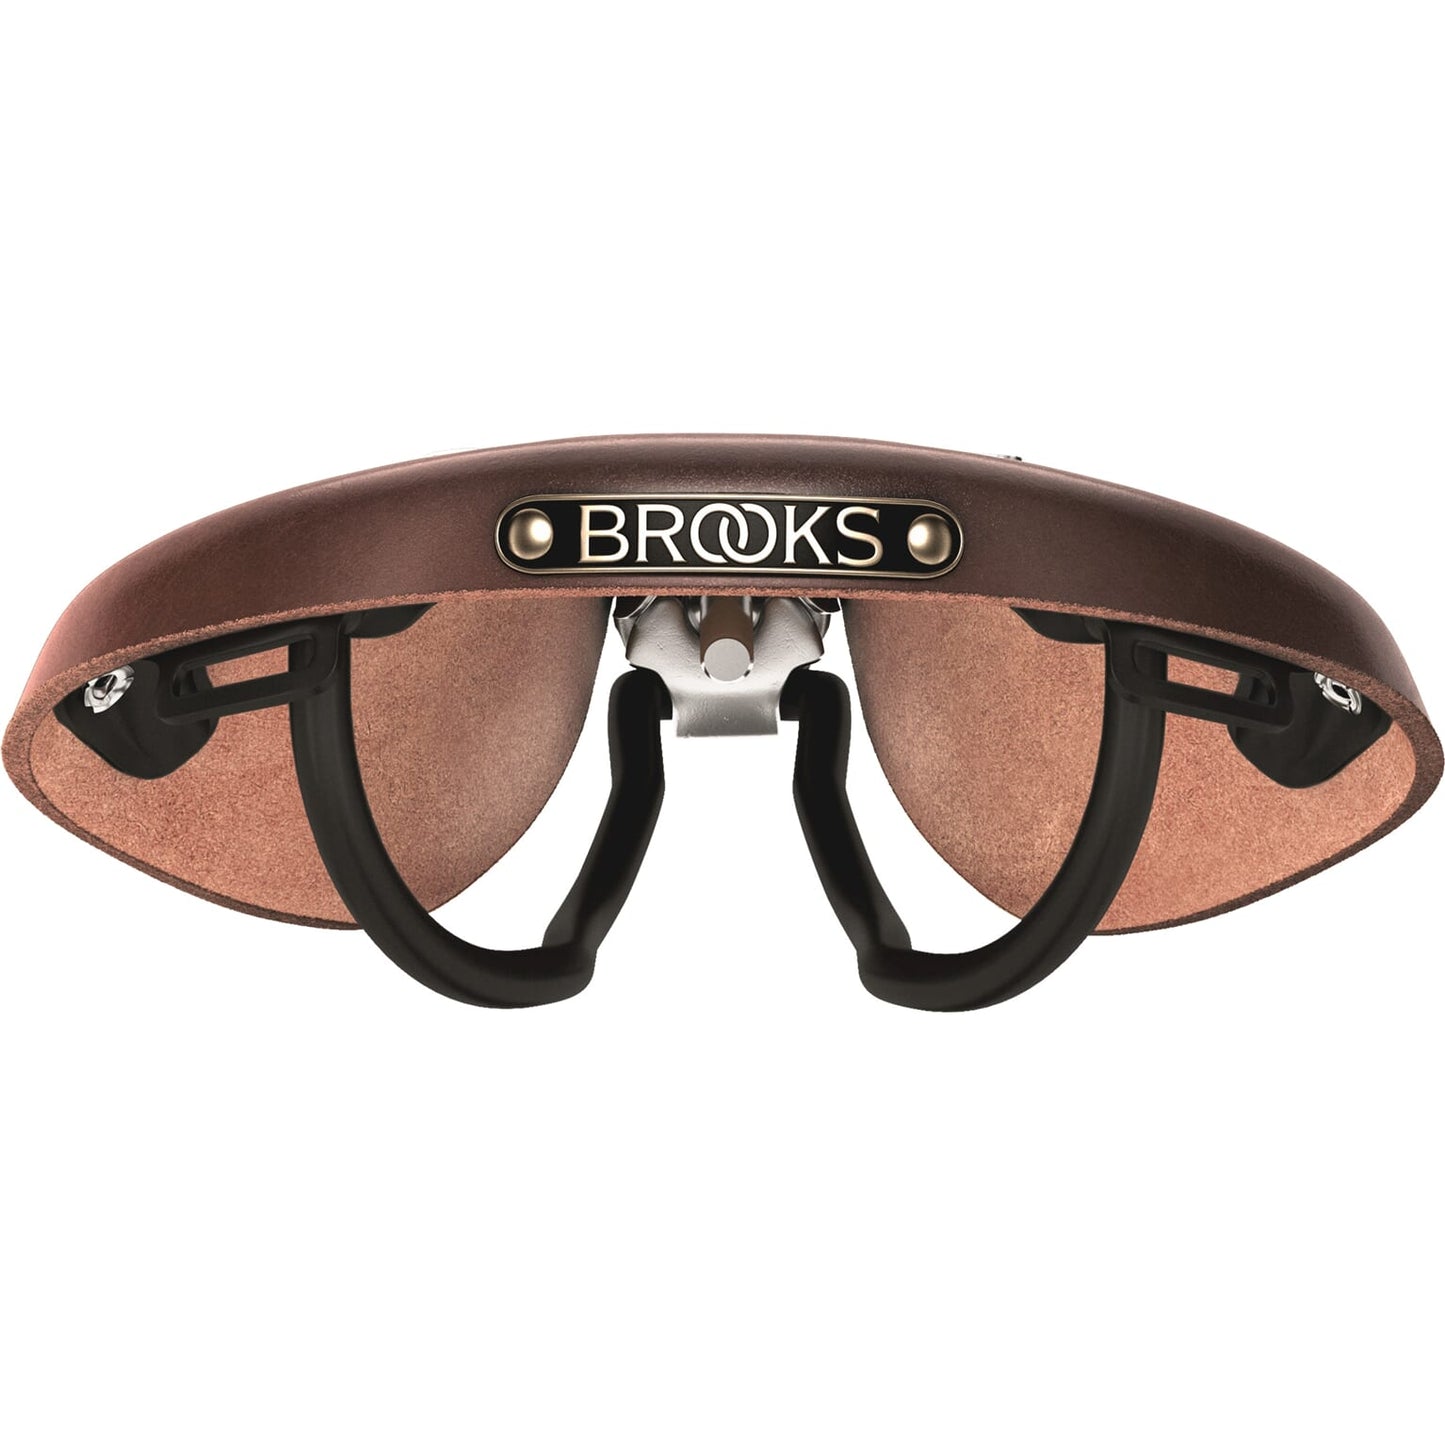 Brooks Saddle B17s Damas Brown